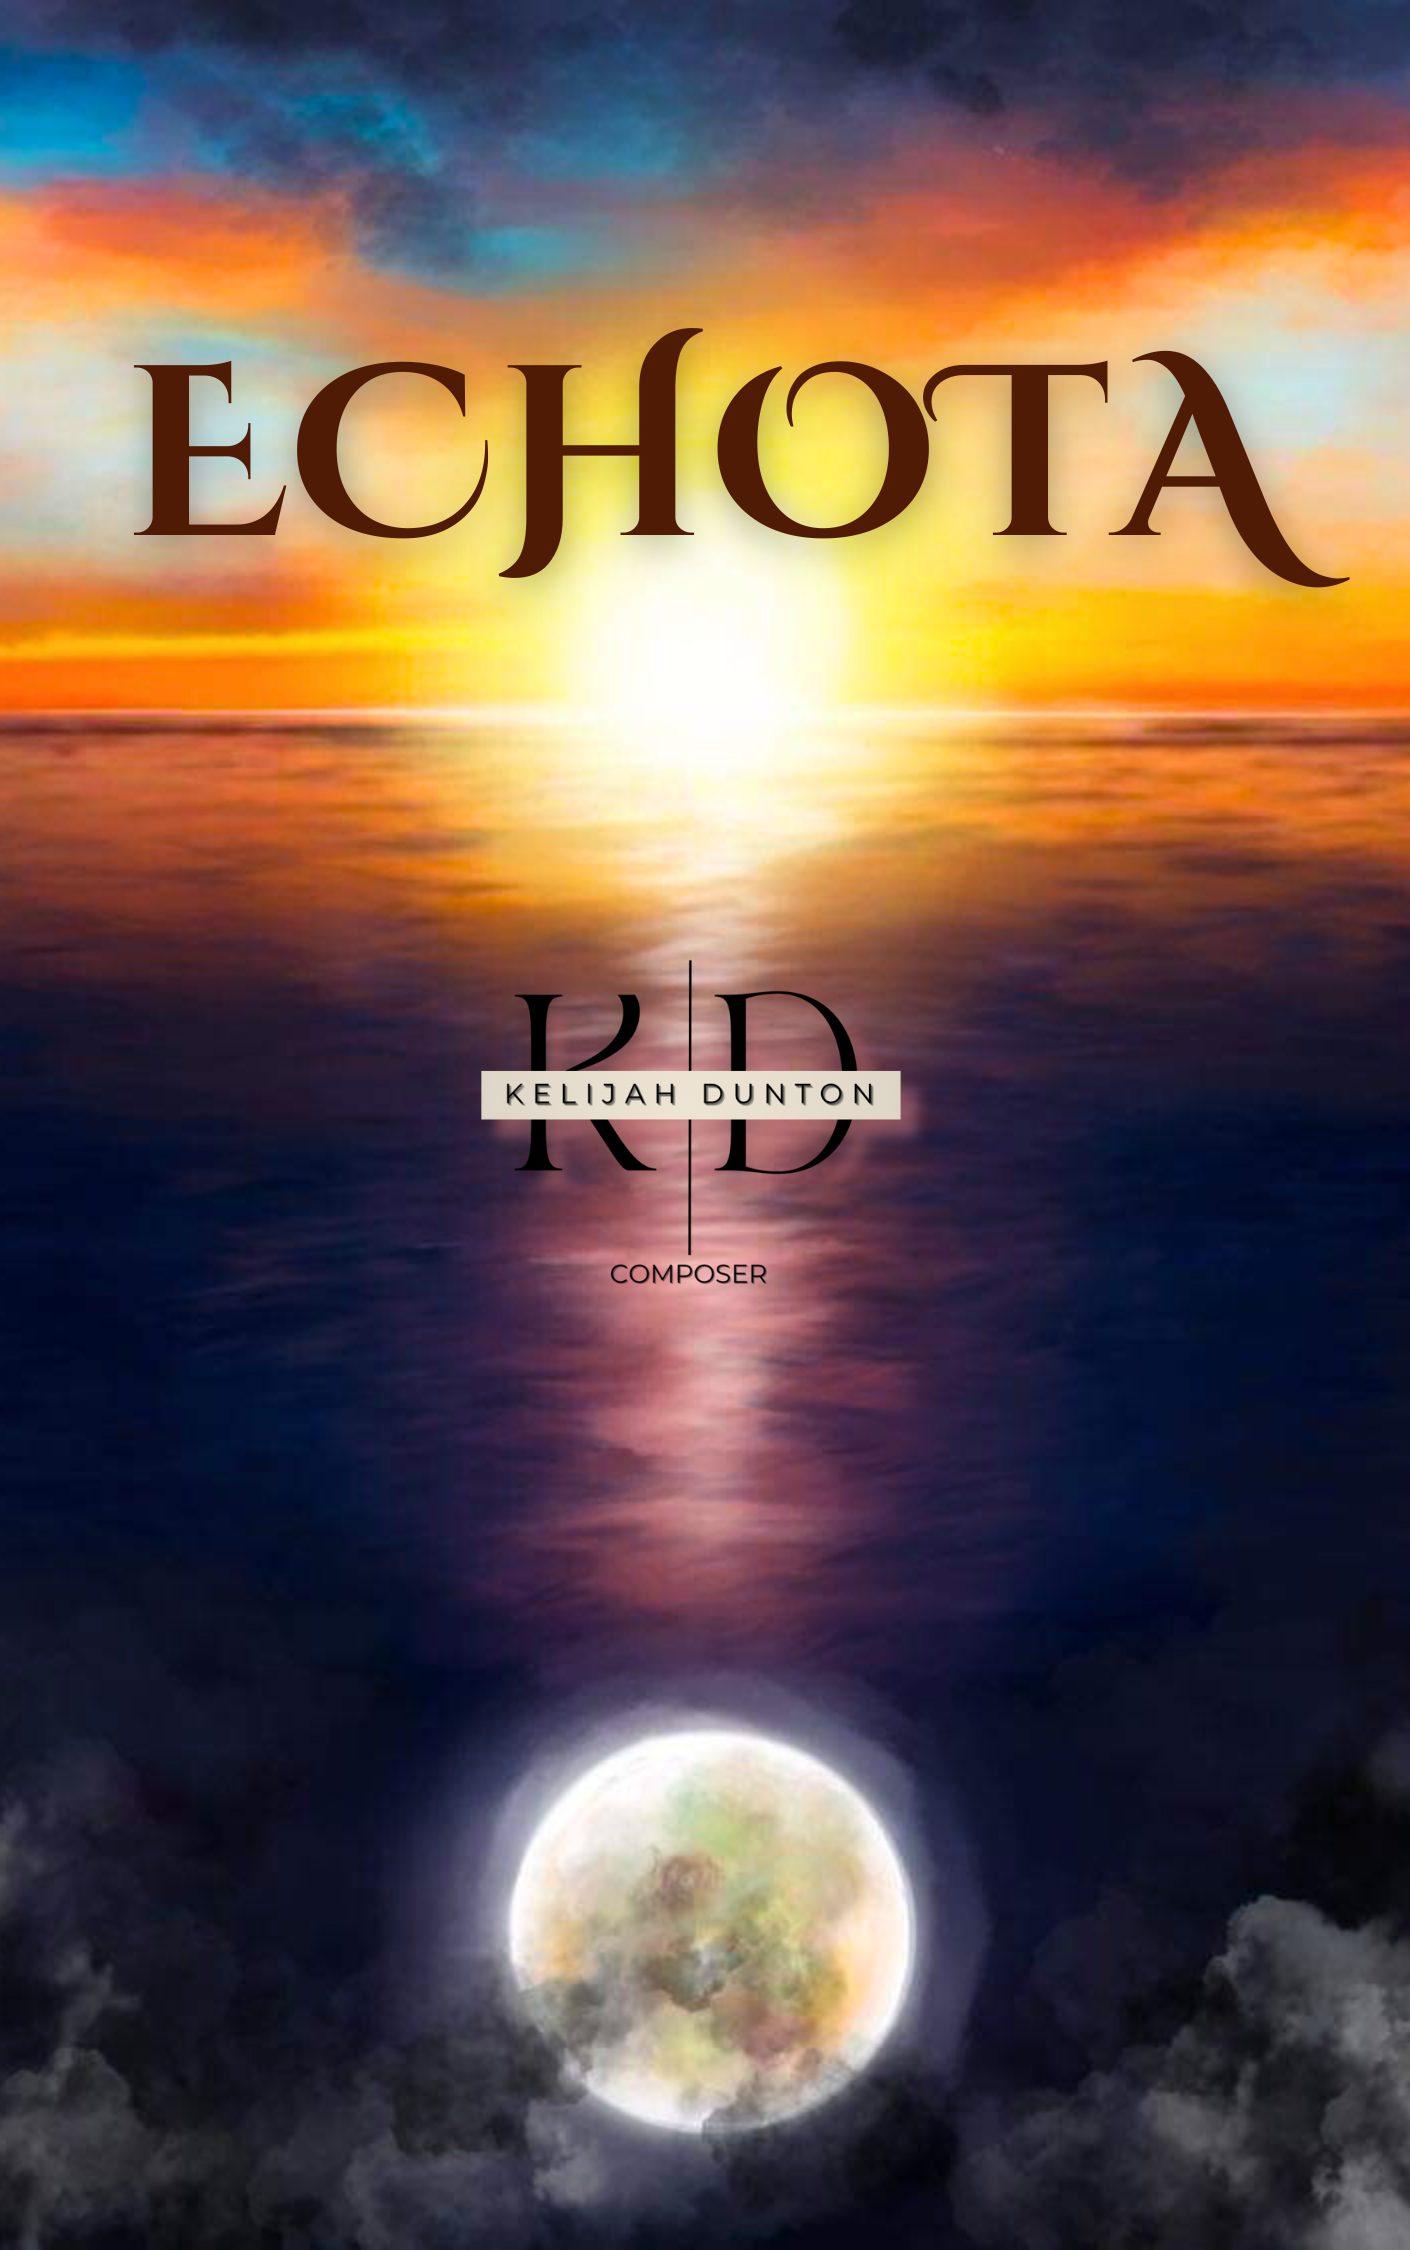 Echota by Kelijah Dunton